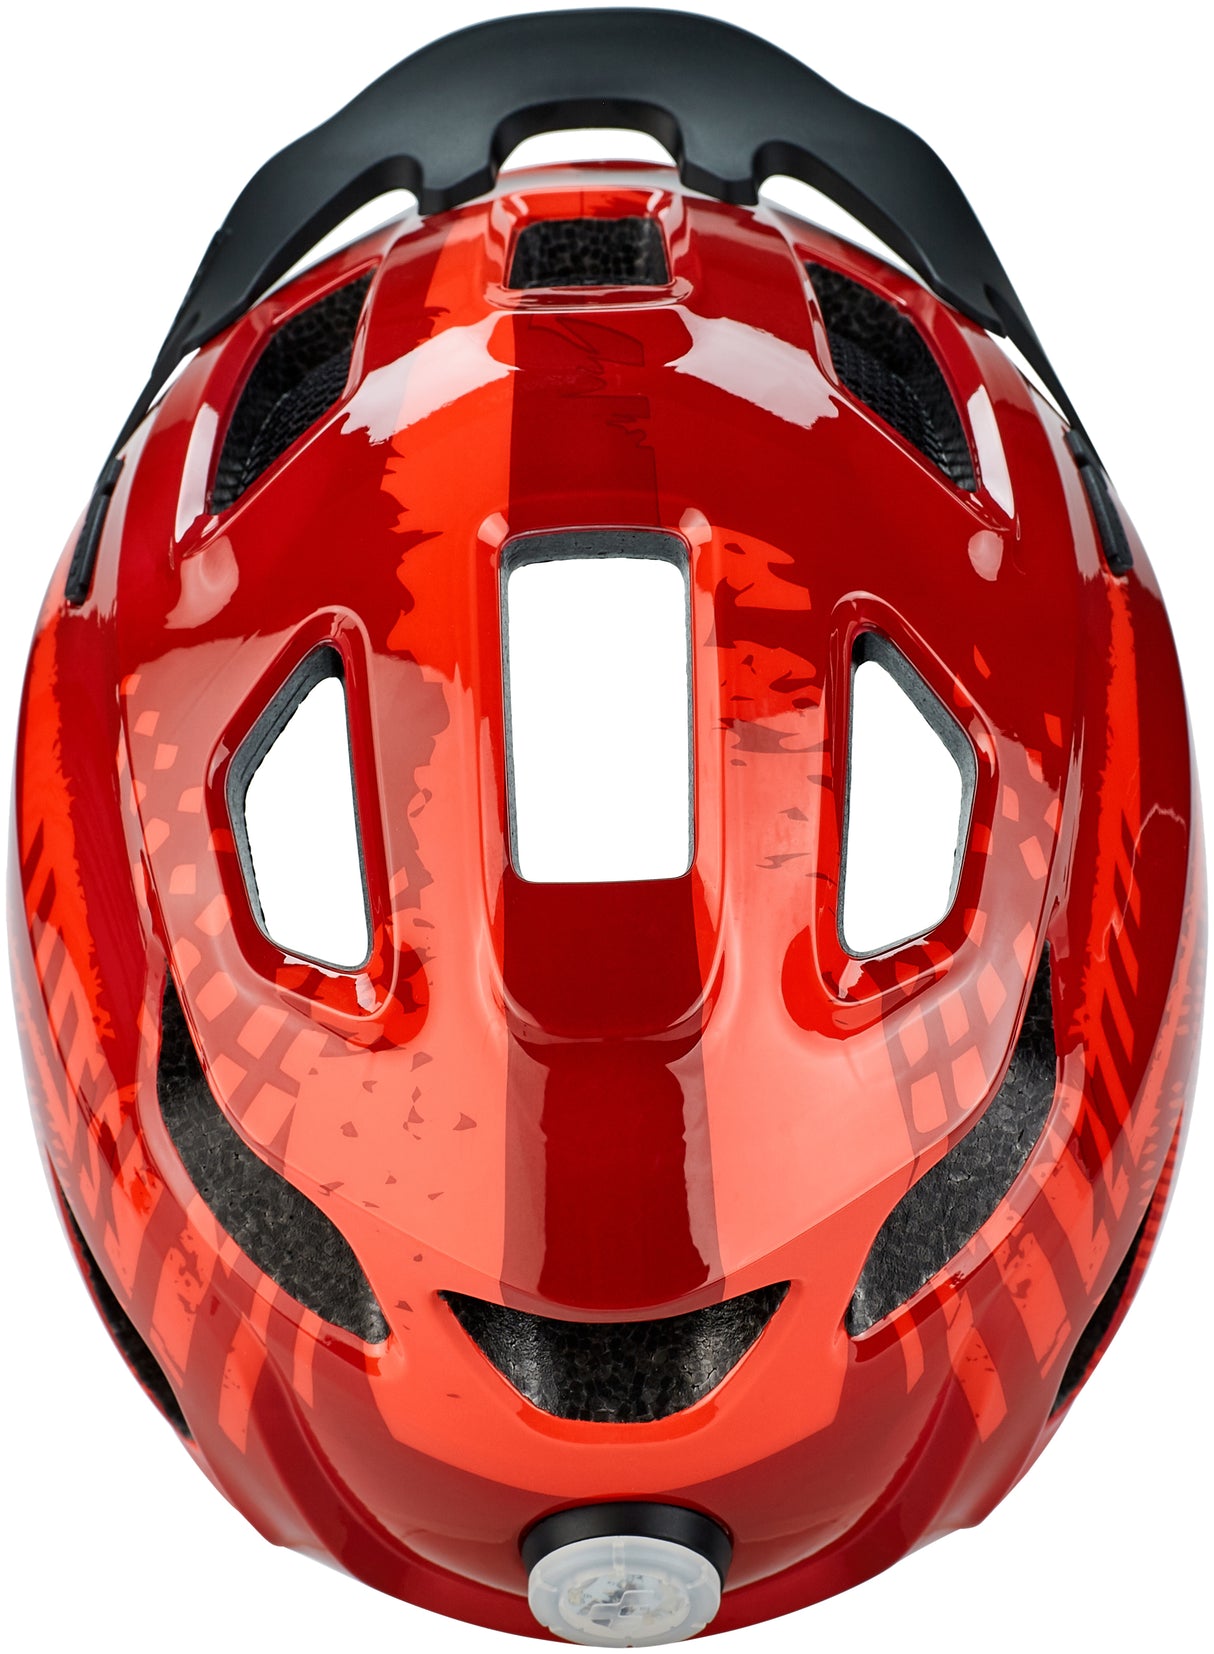 CUBE Helm ANT red splash